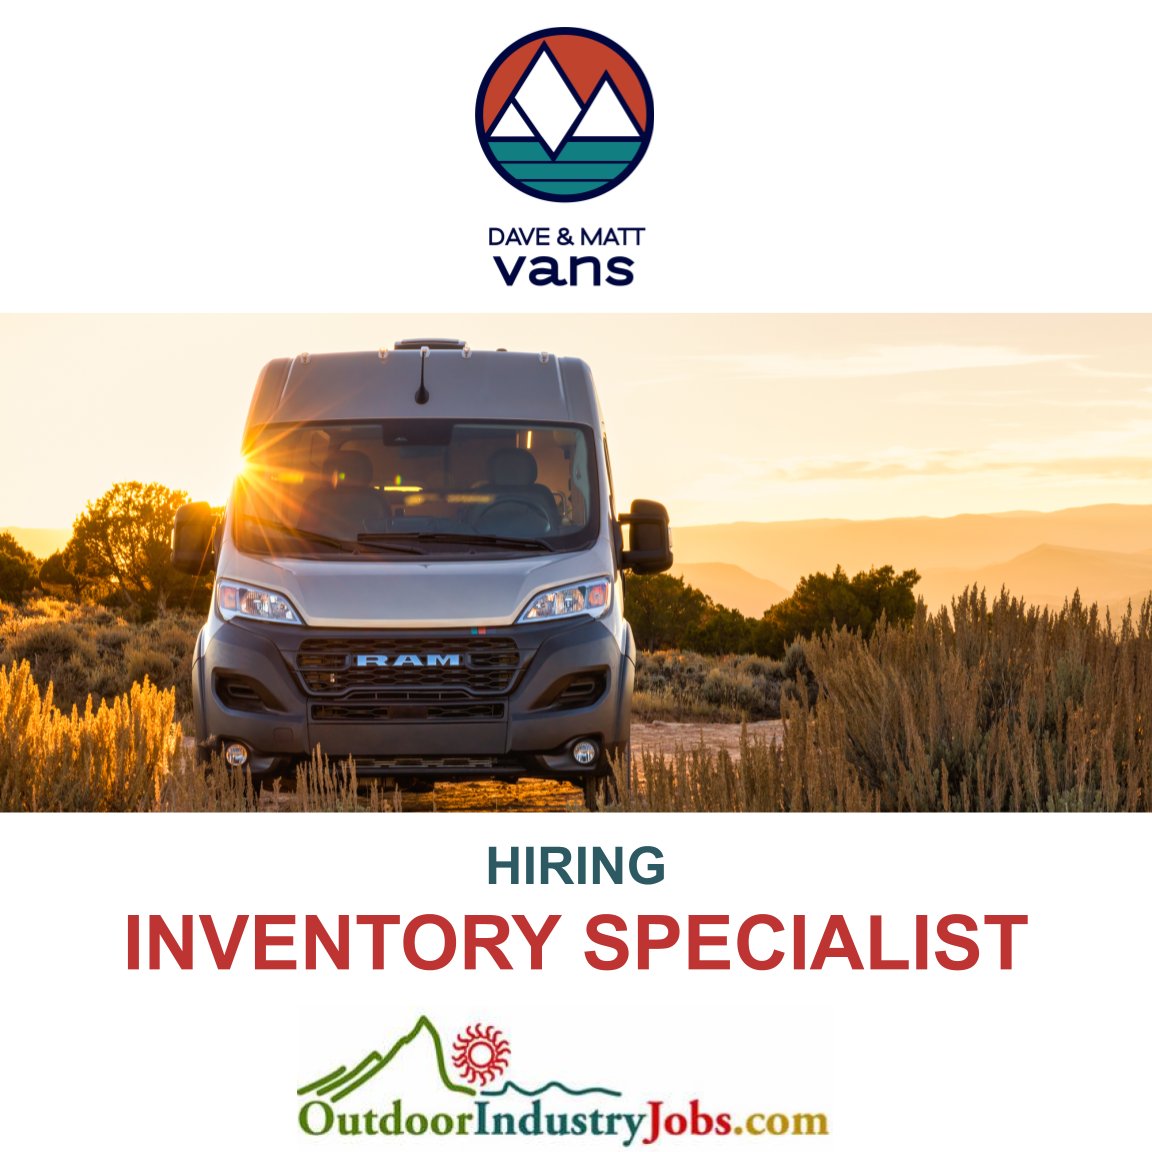 Apply Here: outdoorindustryjobs.com/JobDetail/GetJ…

#outdoorindustryjobs #inventoryspecialist #vanjobs #vanlife #vanlifestyle #vanlifestyles #hiring #hiringnow